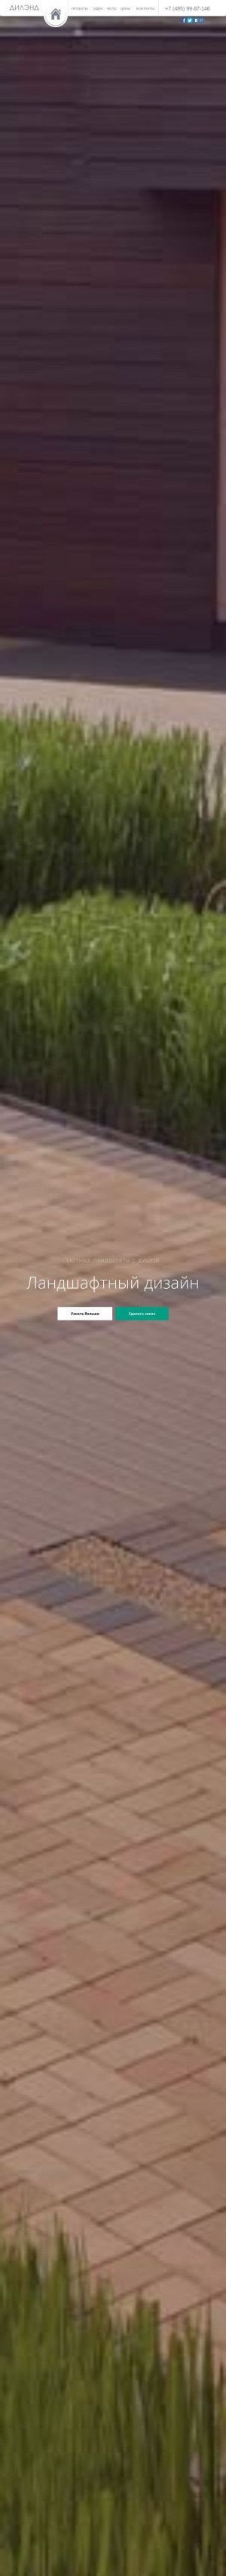 Предпросмотр для www.diland.ru — Ландшафтная компания ДиЛэнд